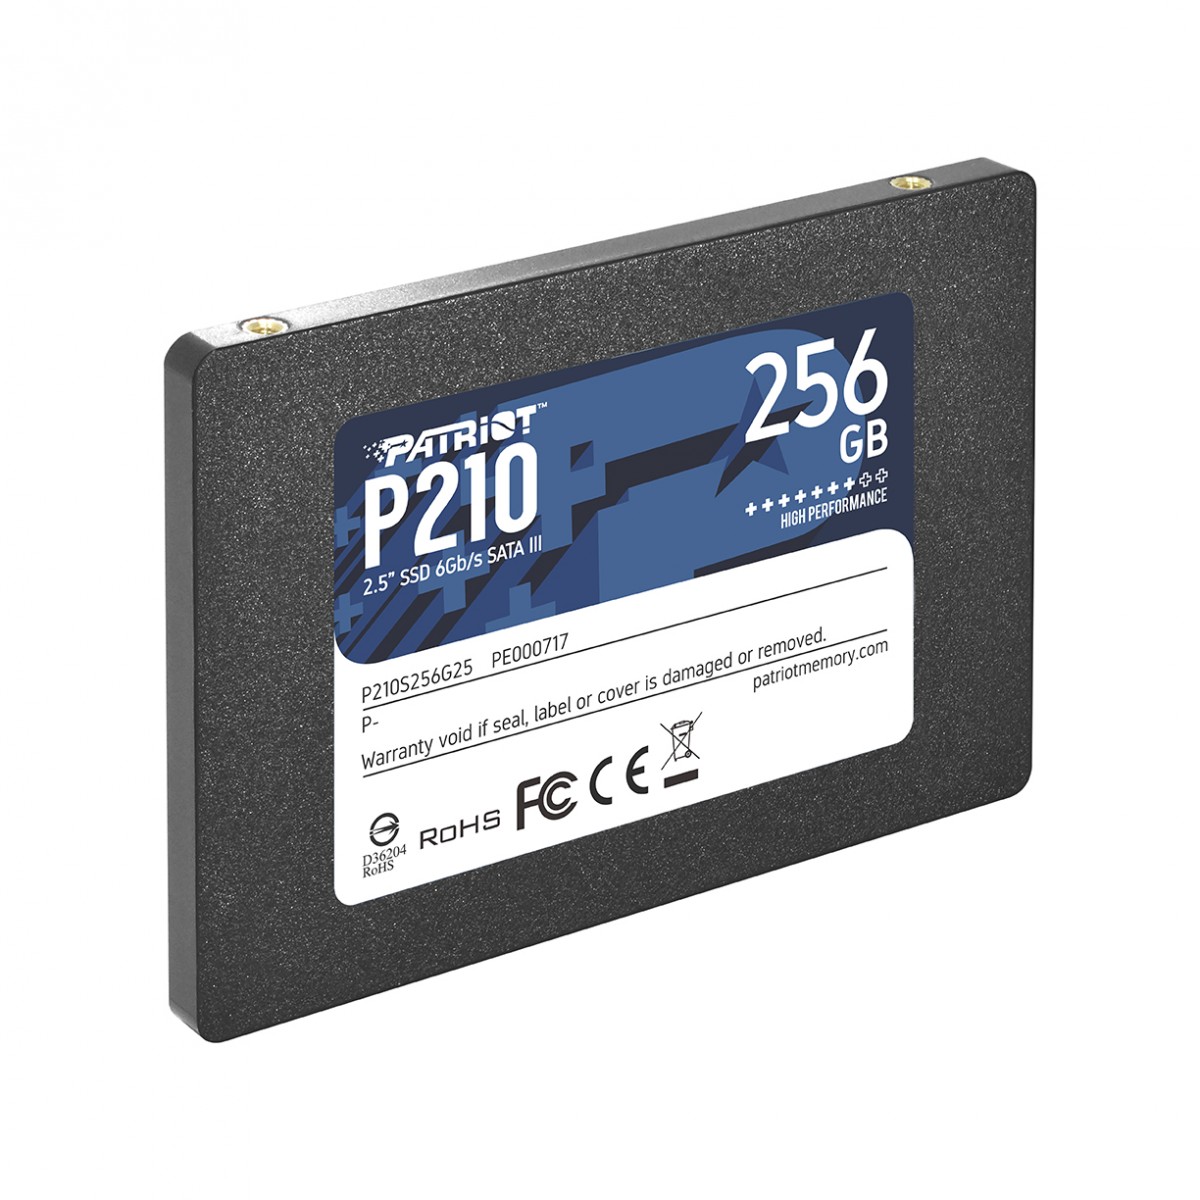 SSD Patriot P210, 256GB, Sata III, Leitura 500MB/s e Gravação 400MB/s, P210S256G25 - Open Box